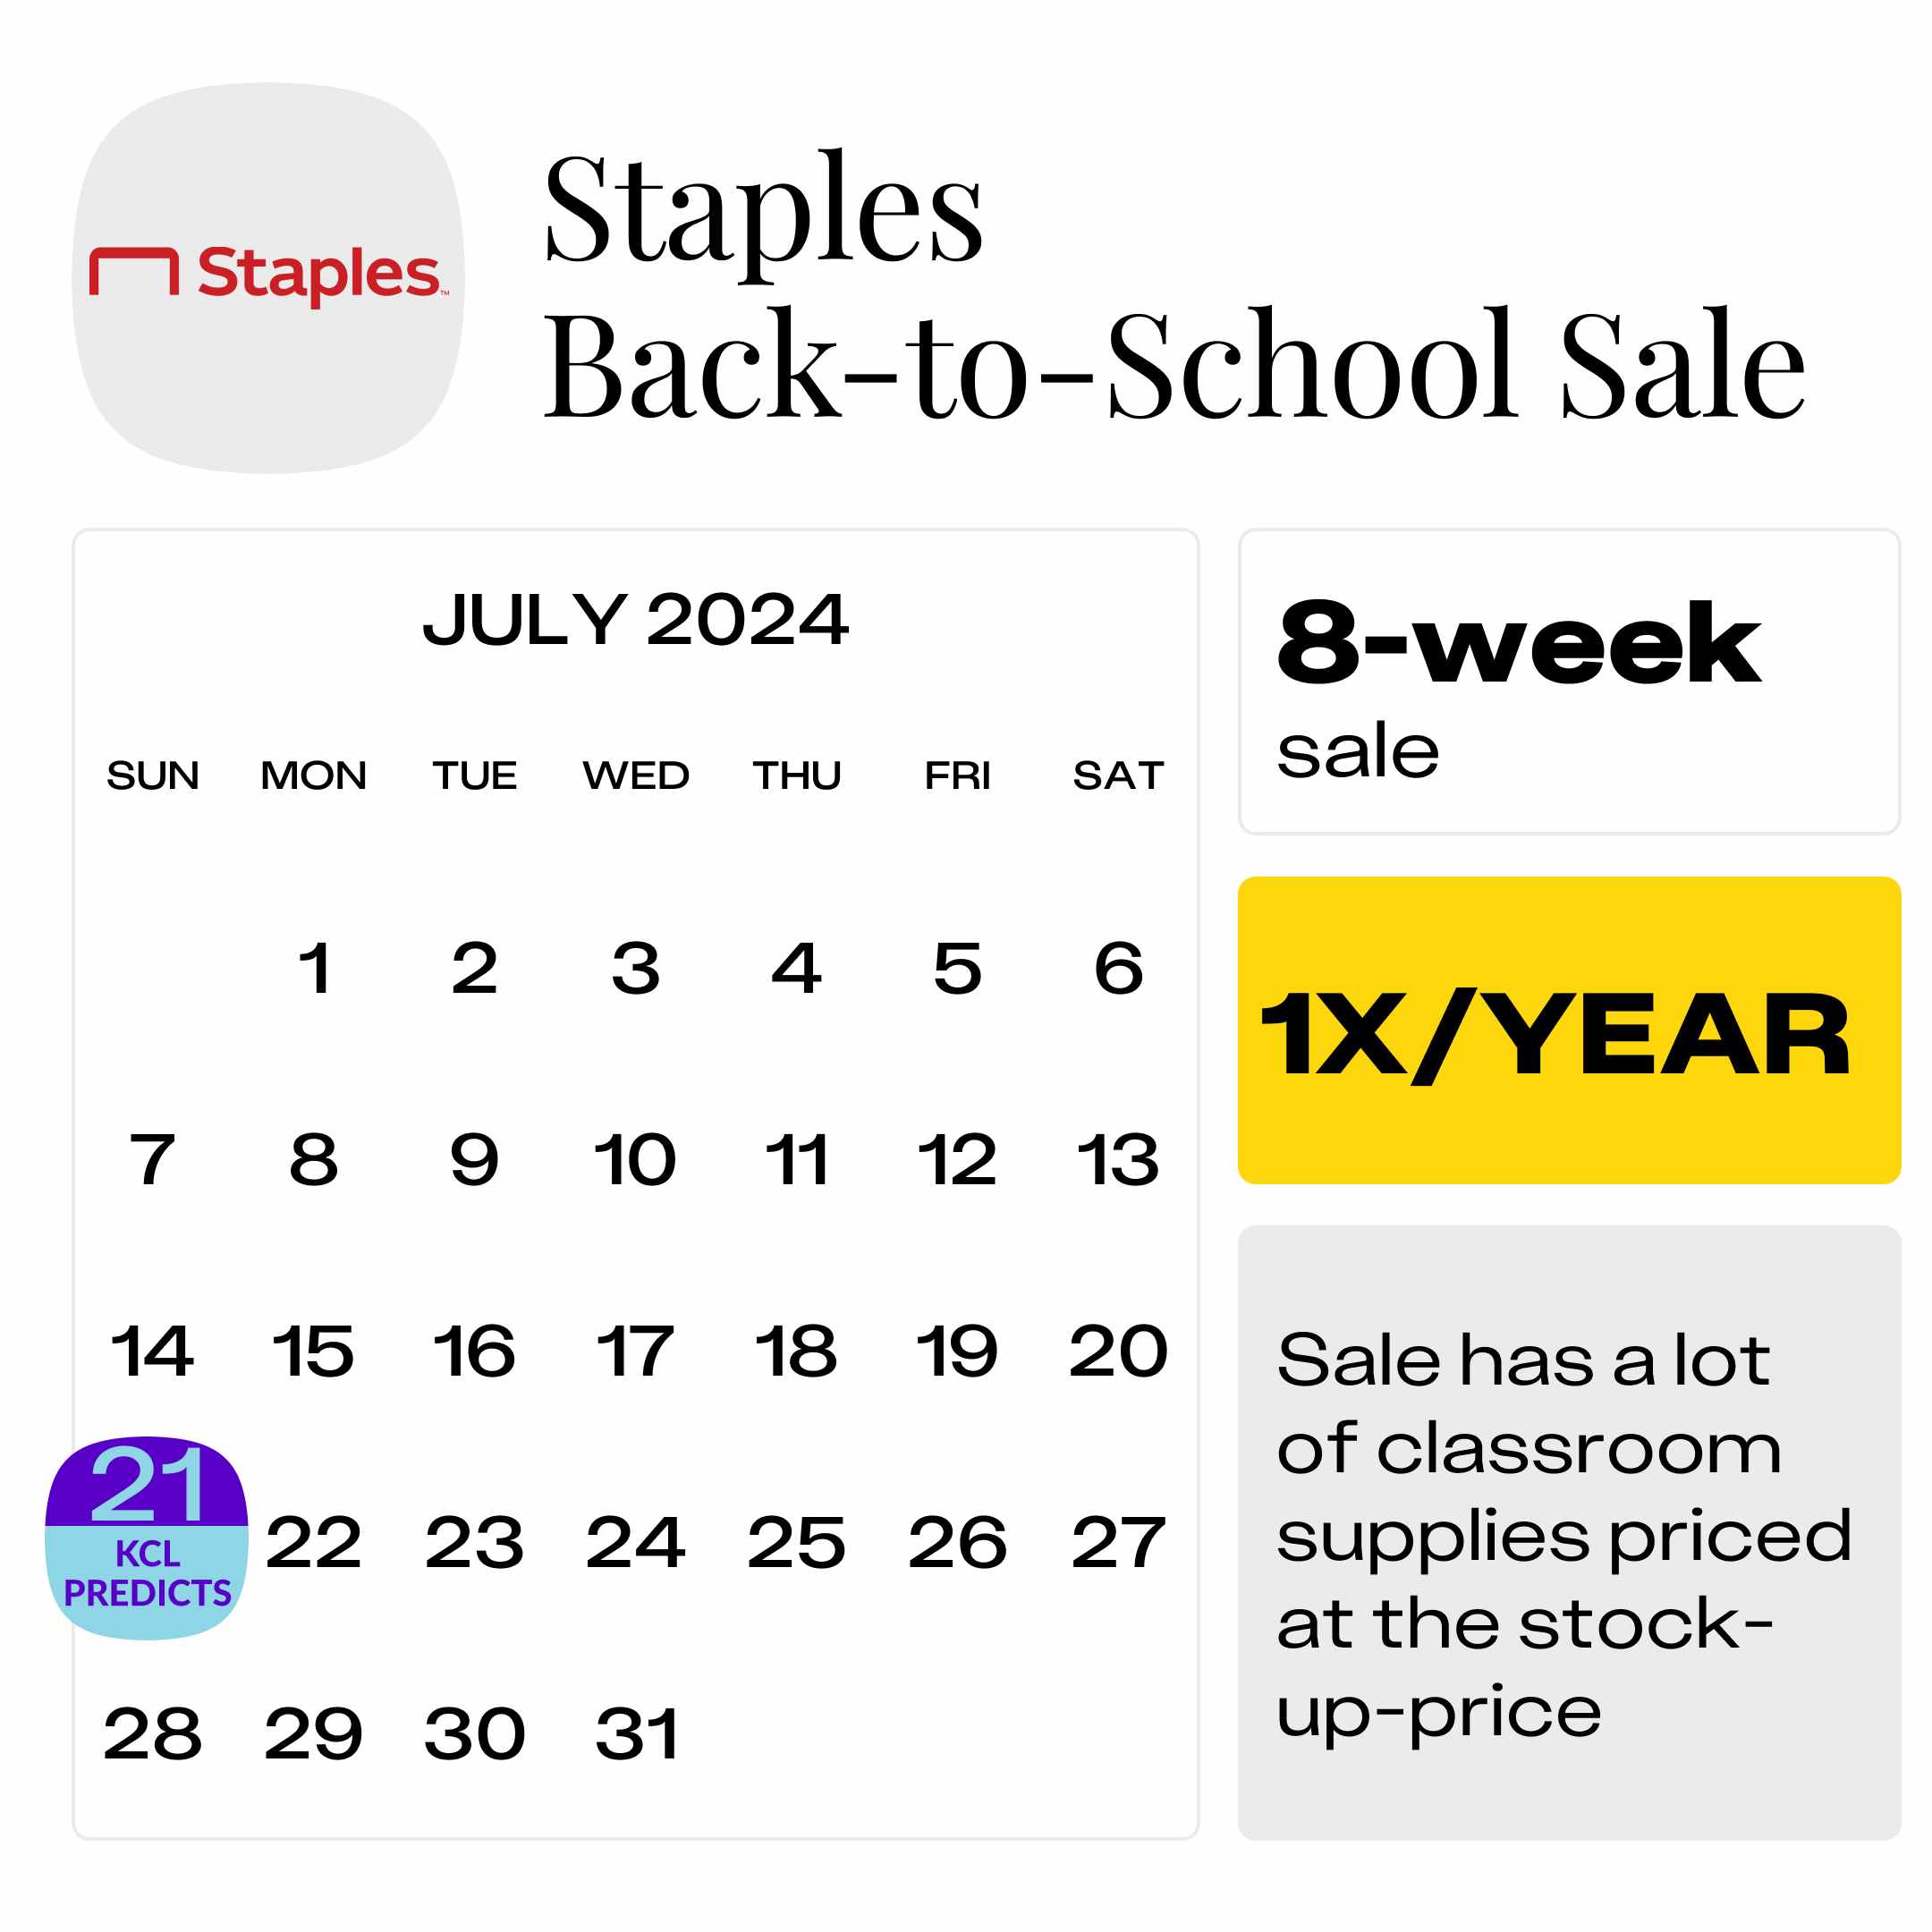 Staples-Back-to-School-Sale